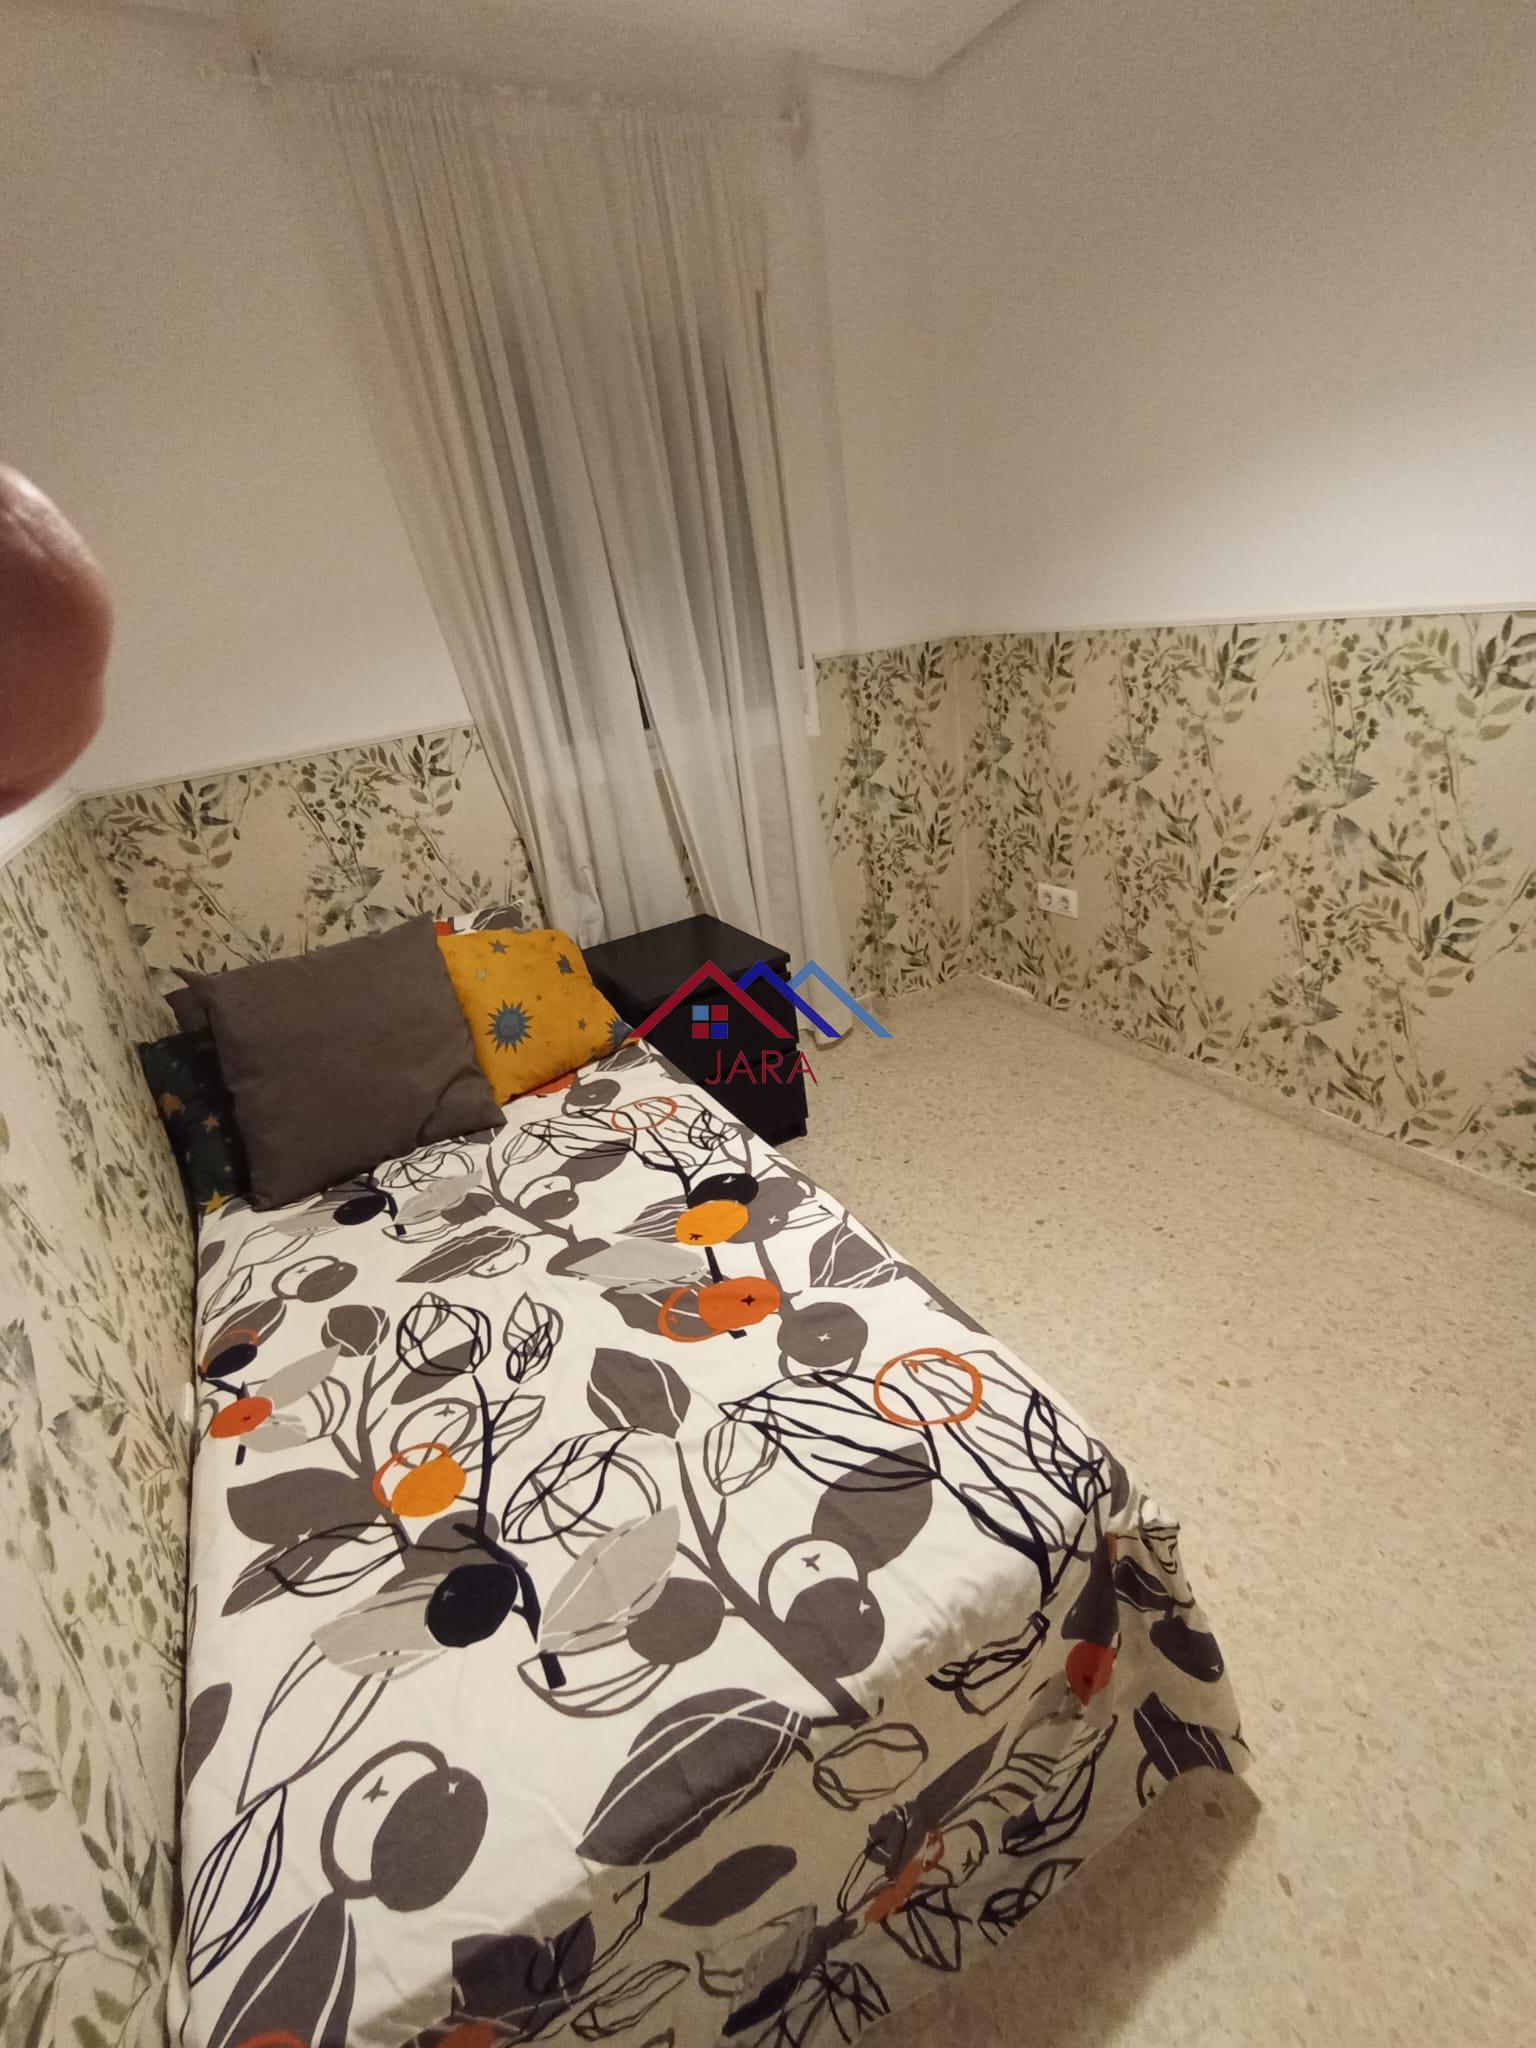 For rent of flat in Jerez de la Frontera